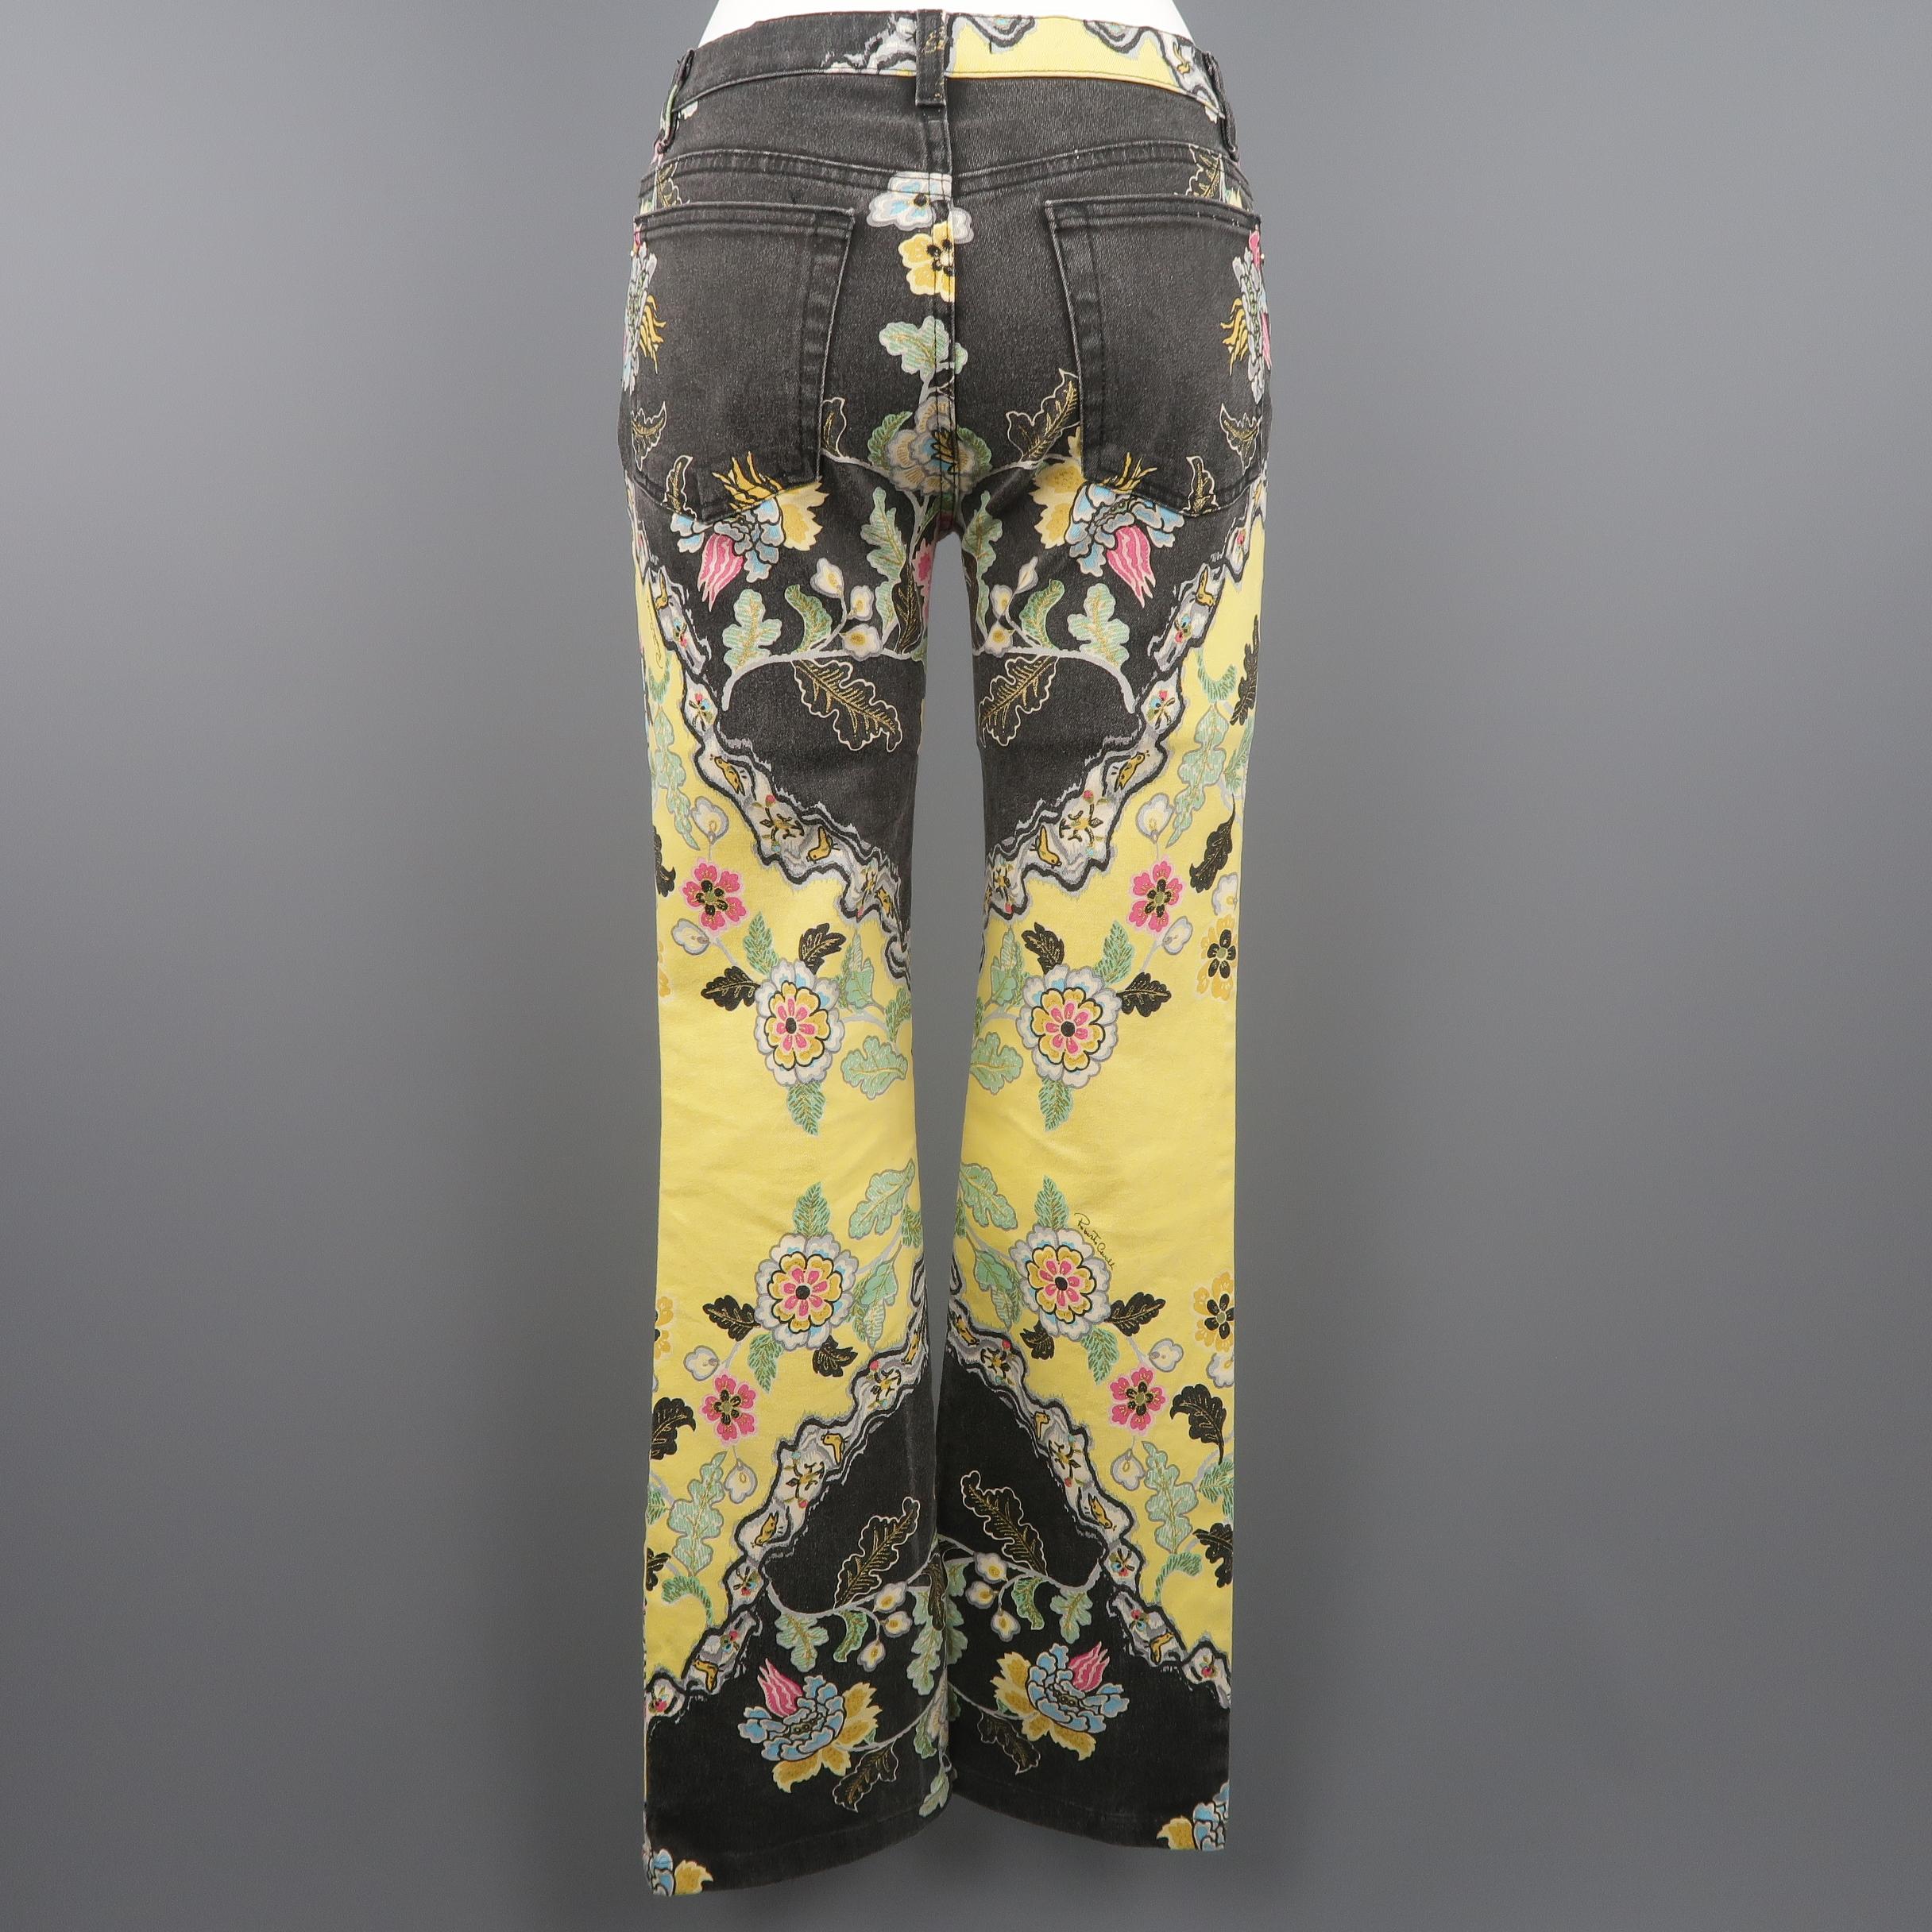 ROBERTO CAVALLI Size S Yellow & Black Floral Print Cotton Blend Jeans 3